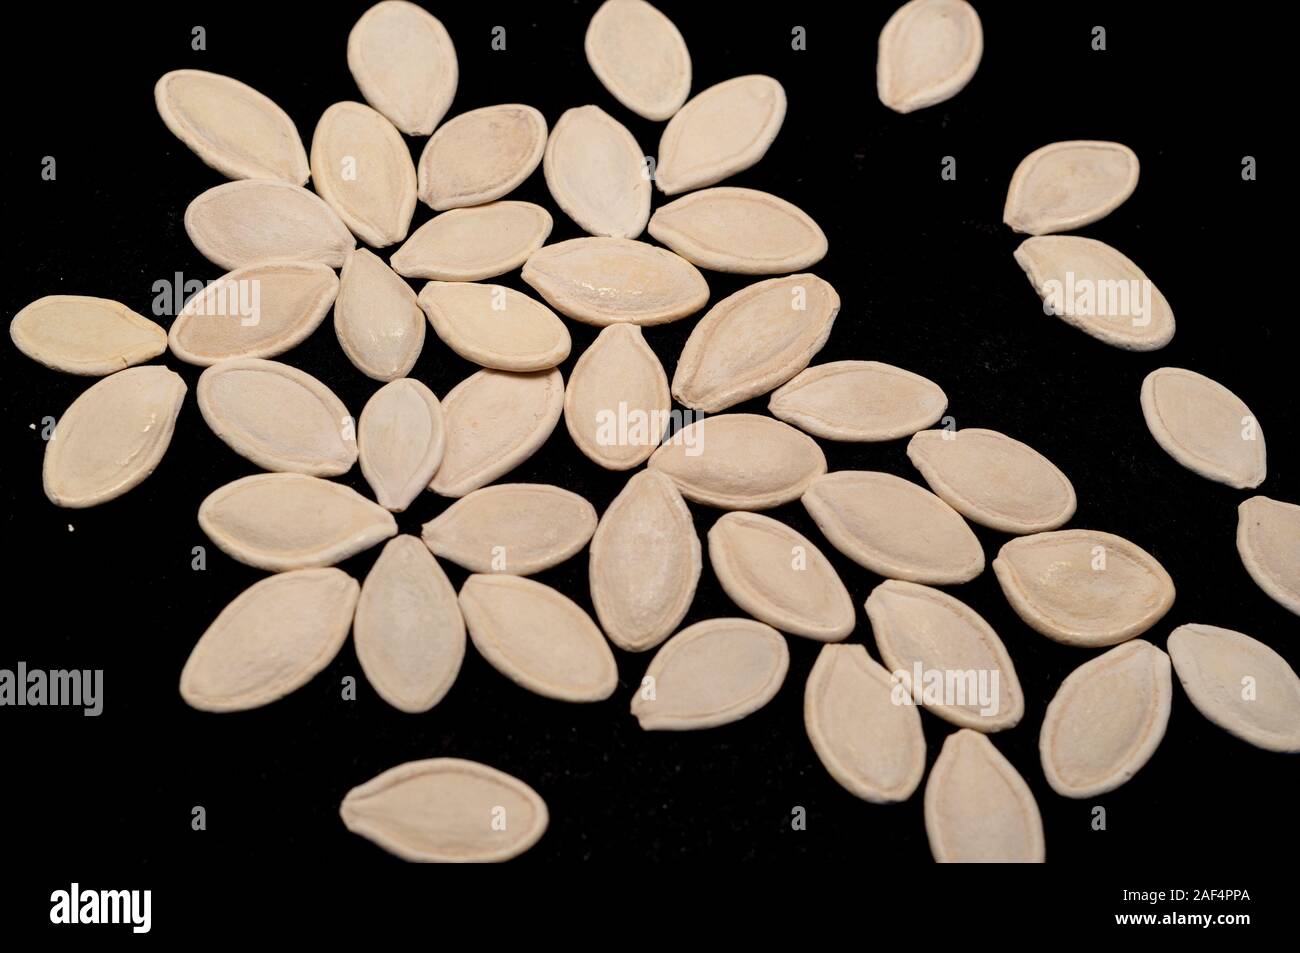 many pumpkin seeds on dark background. Stock Photo